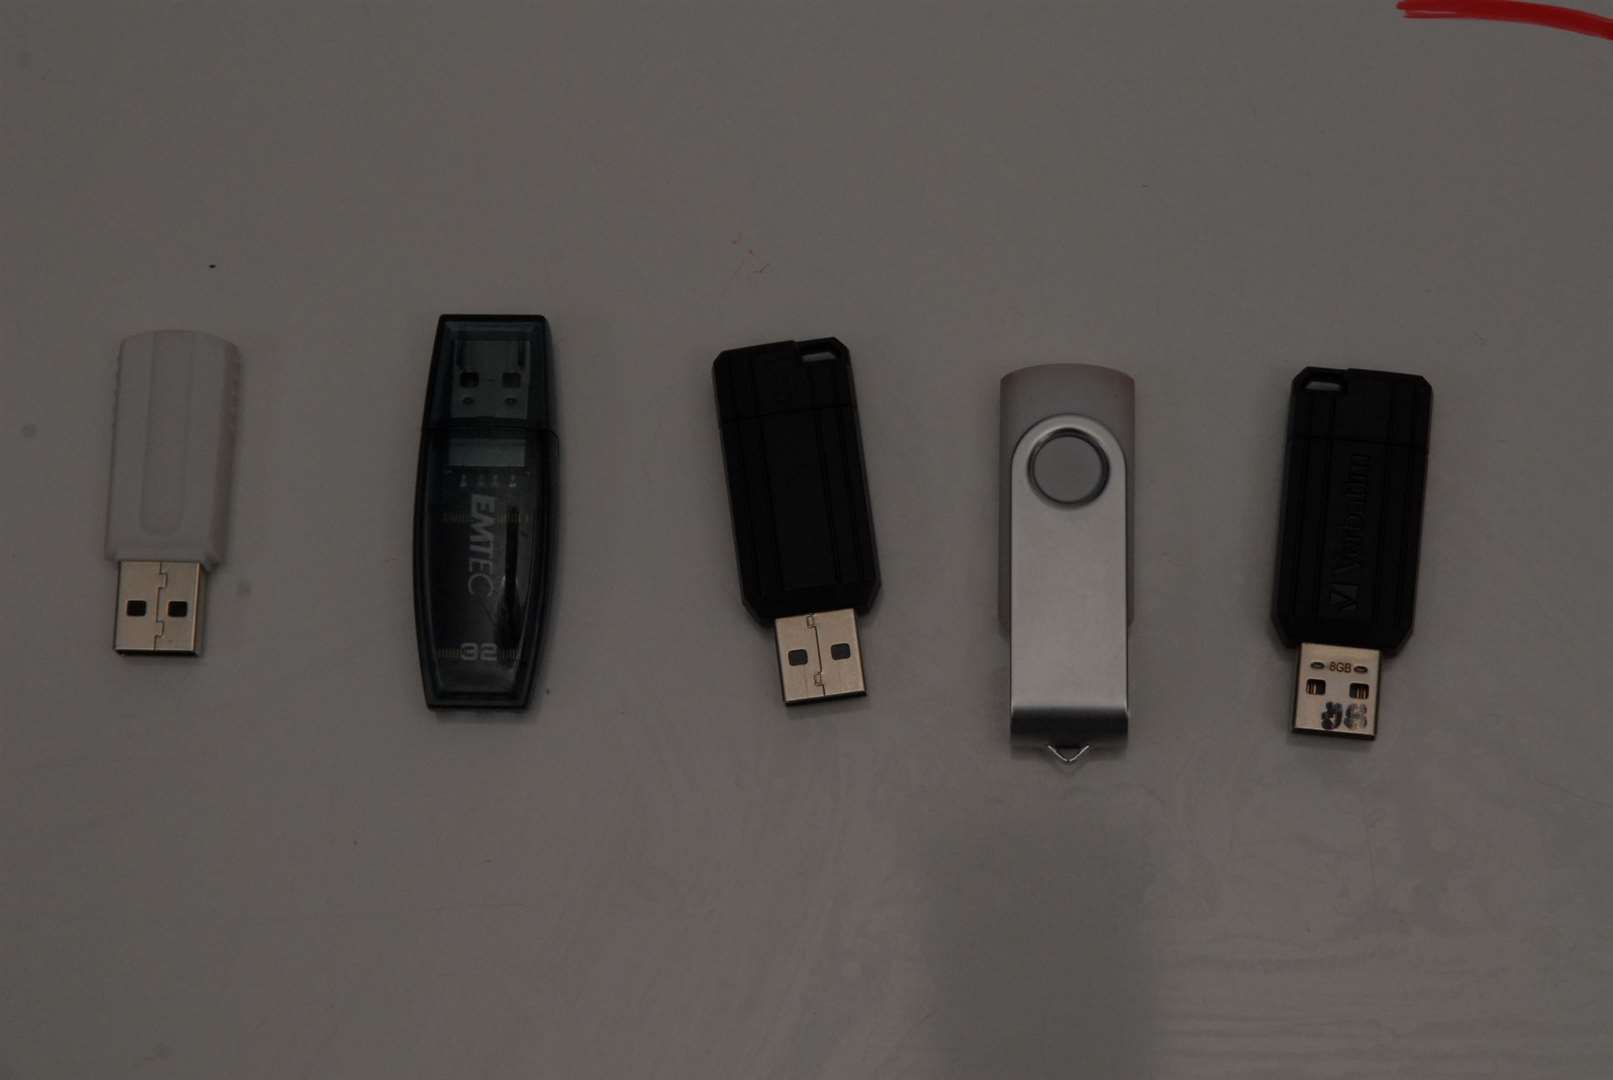 Storage devices belonging to necrophiliac and murderer David Fuller